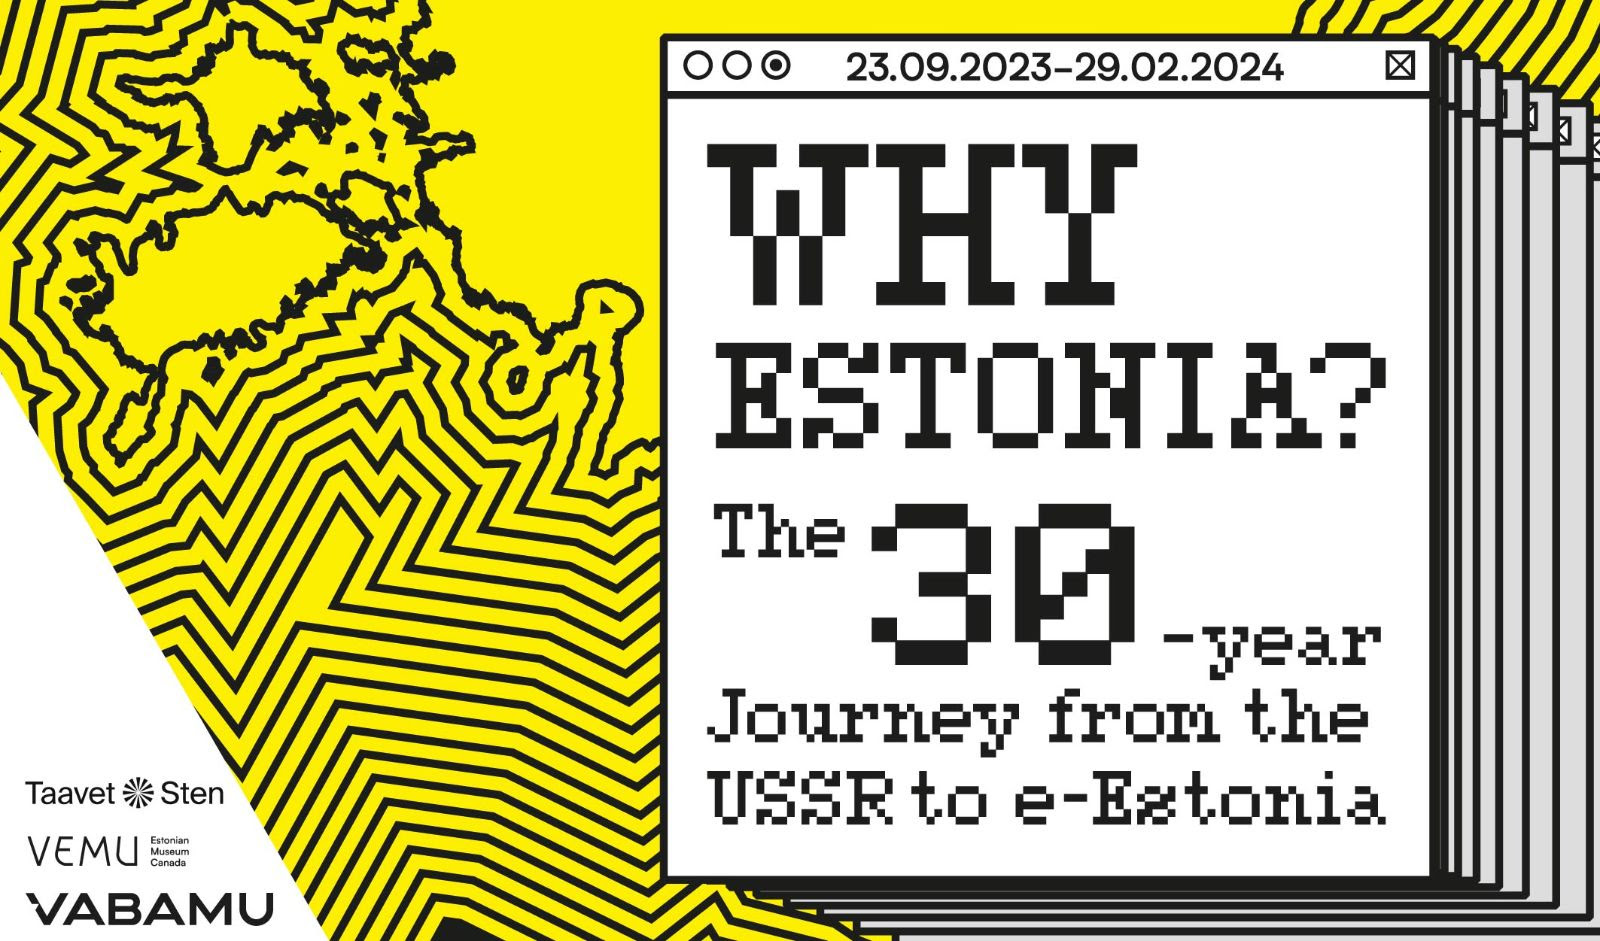 Why Estonia? Exhibit in Toronto